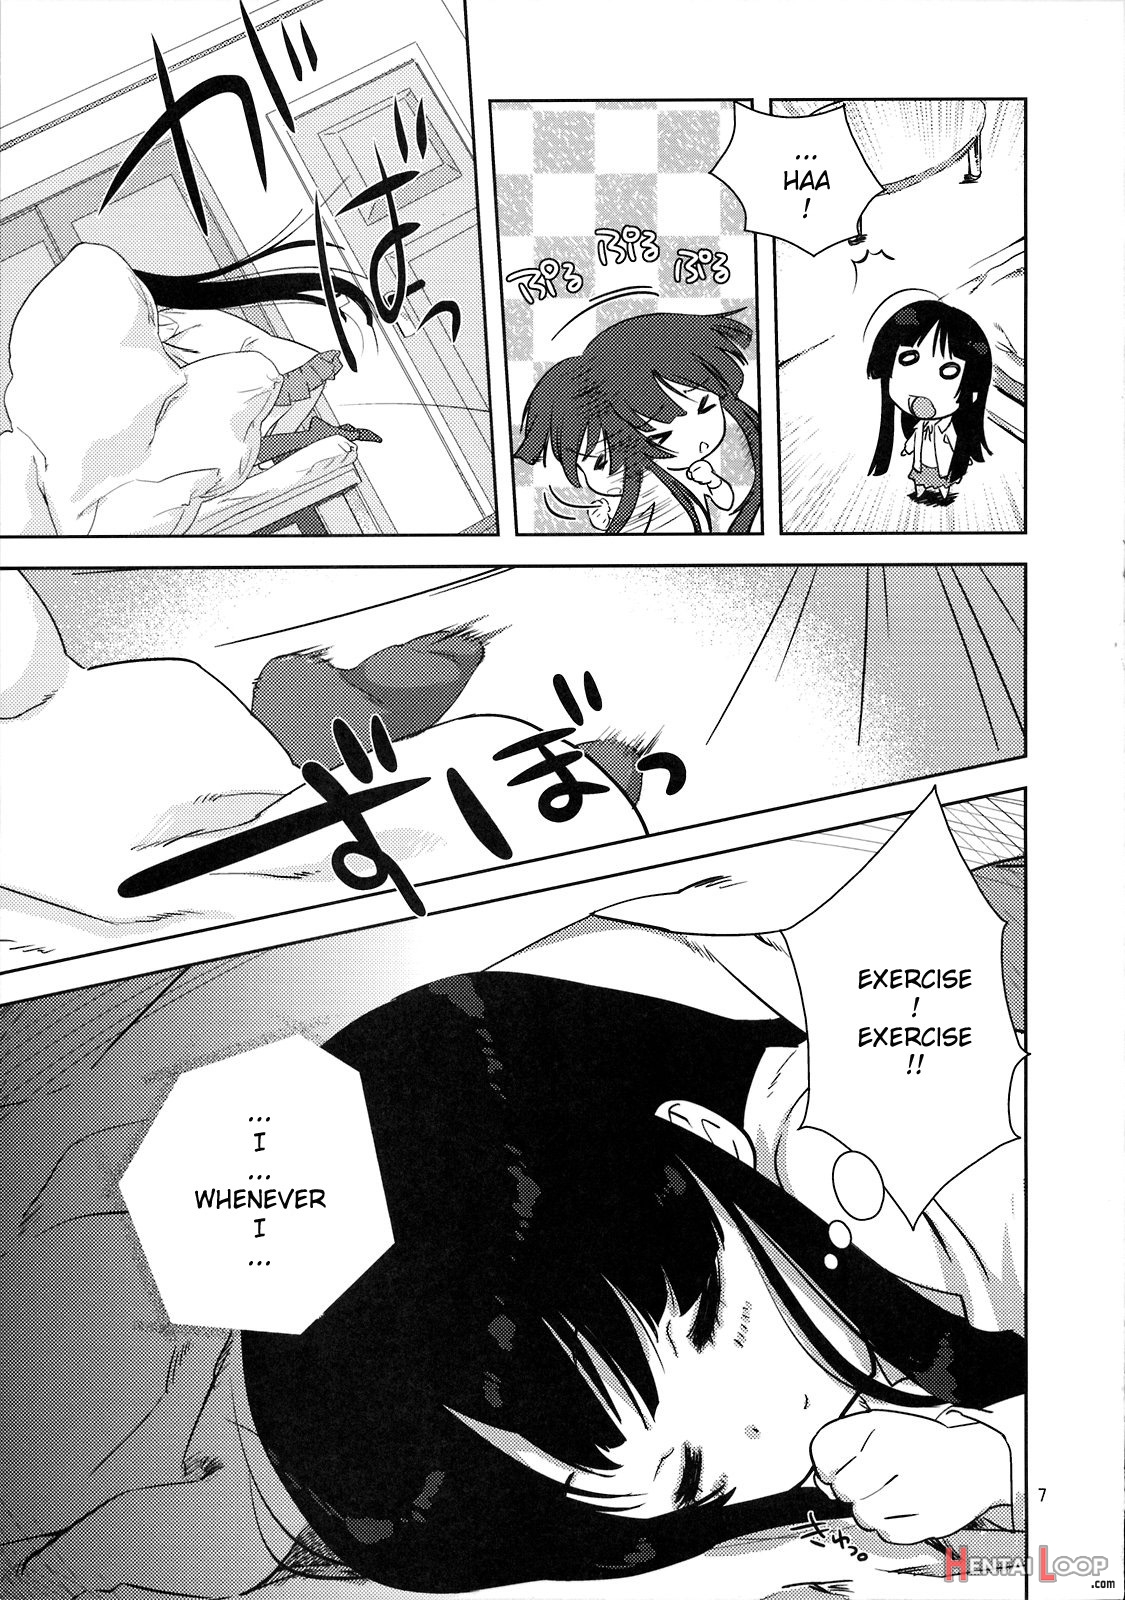 Mio-tan! page 7